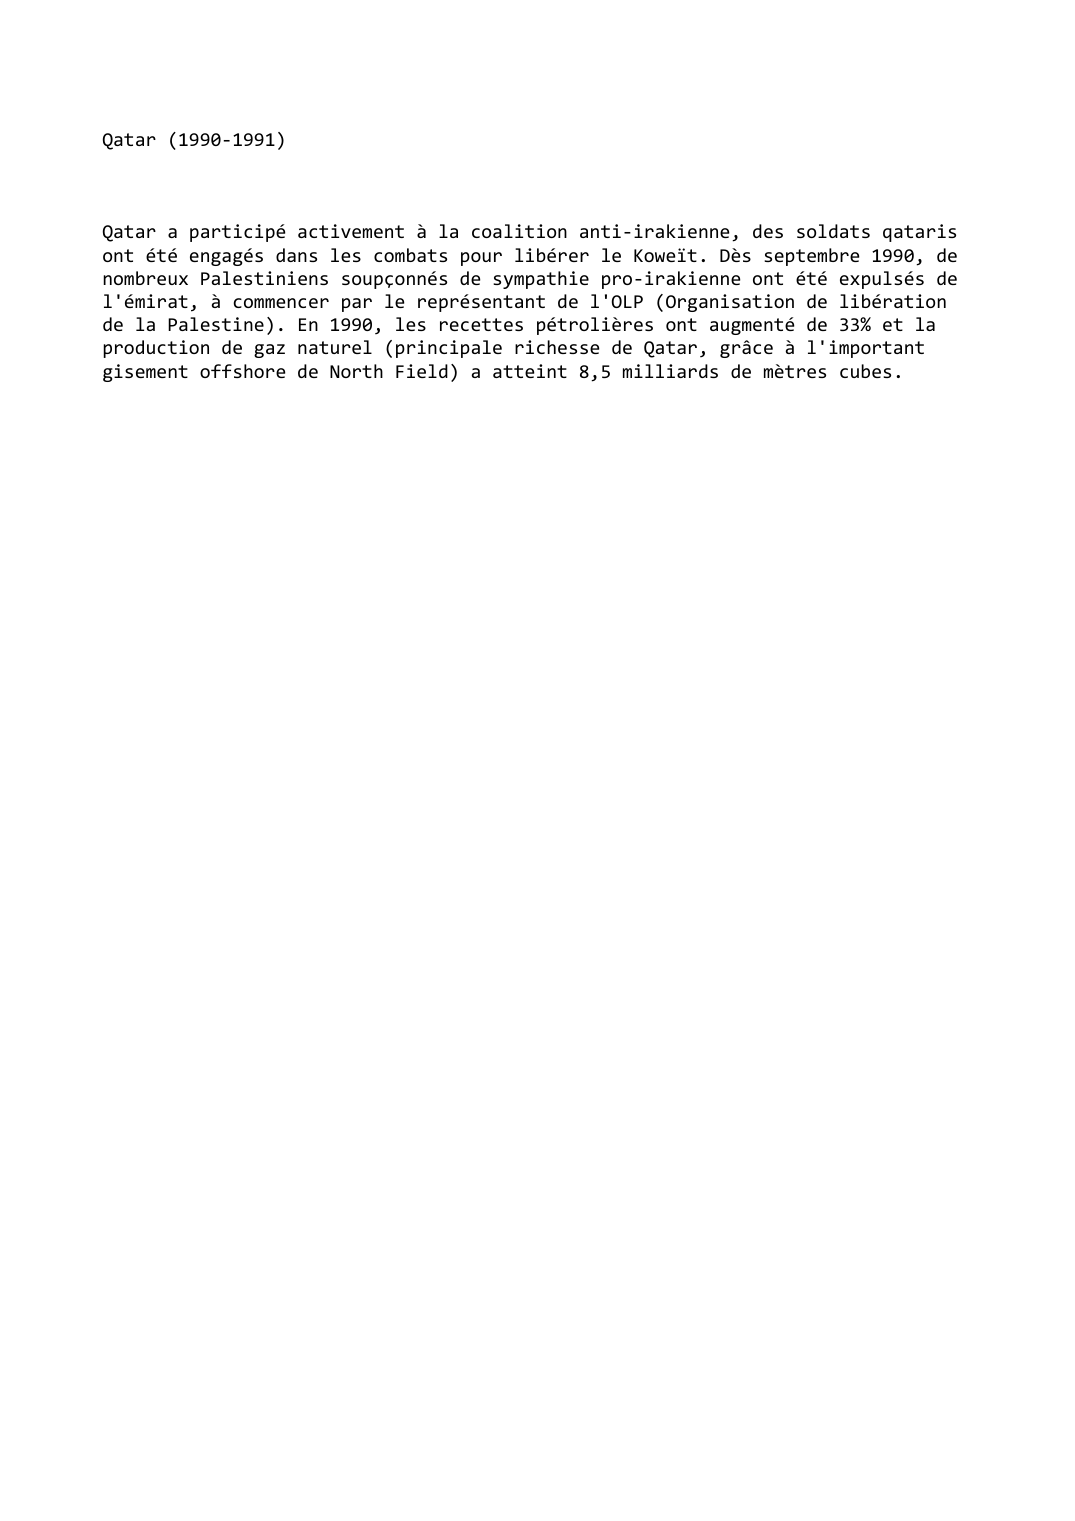 Prévisualisation du document Qatar (1990-1991)